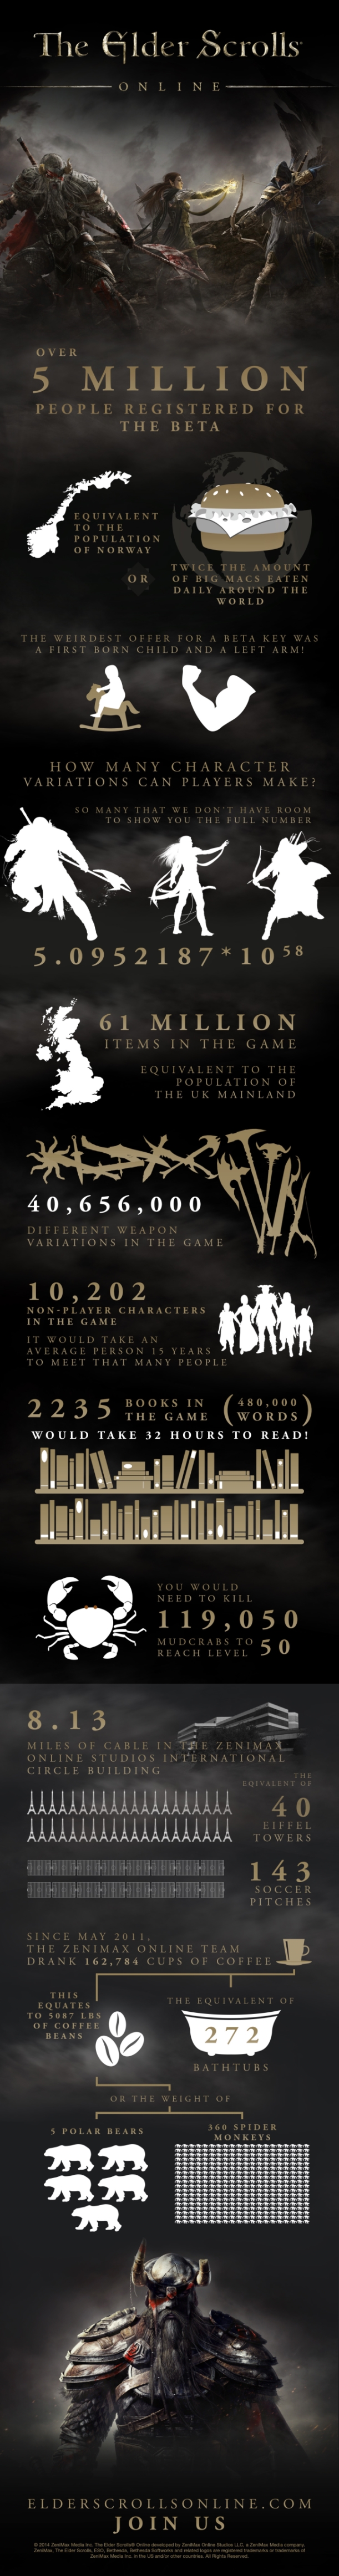 Elder_Scrolls_Online_Infographic